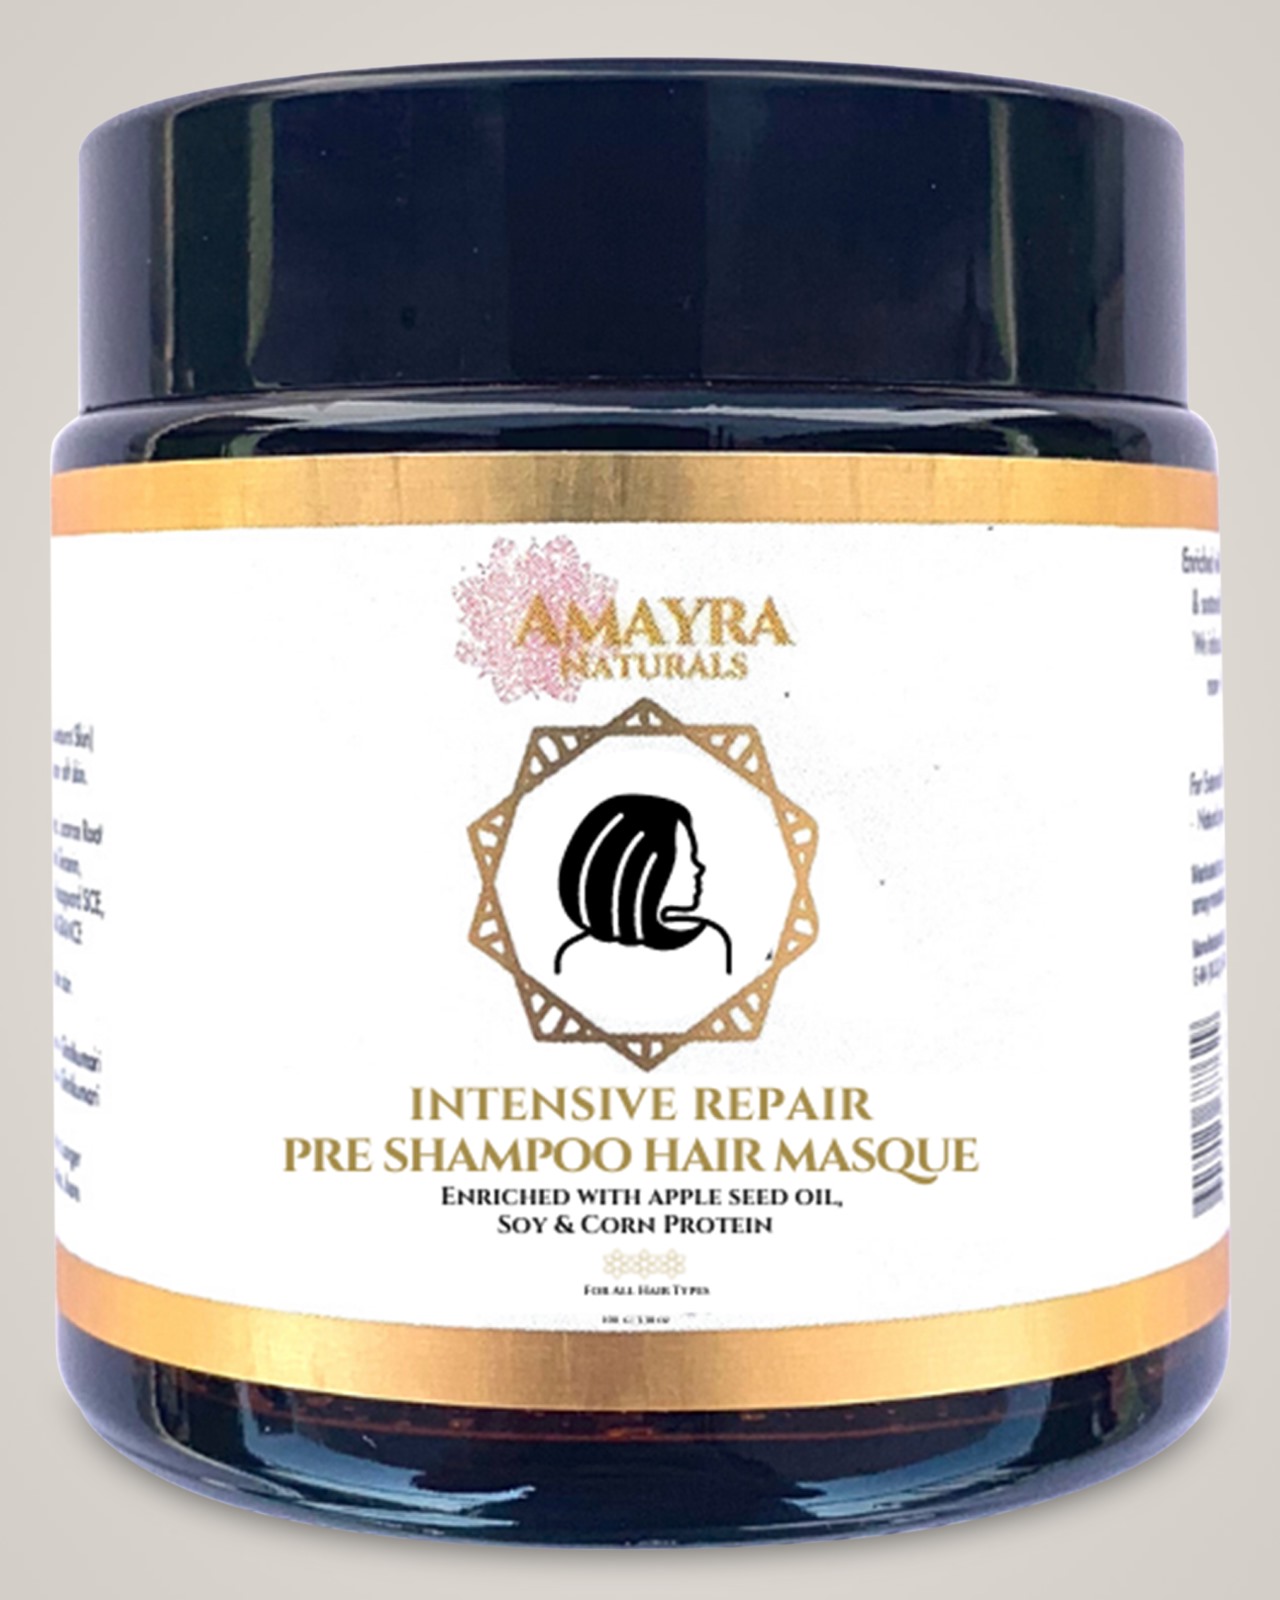 Shenaro-Hair-Masqu-mask-by-Amayra-Naturals-100gmsANKAHSHM01-1